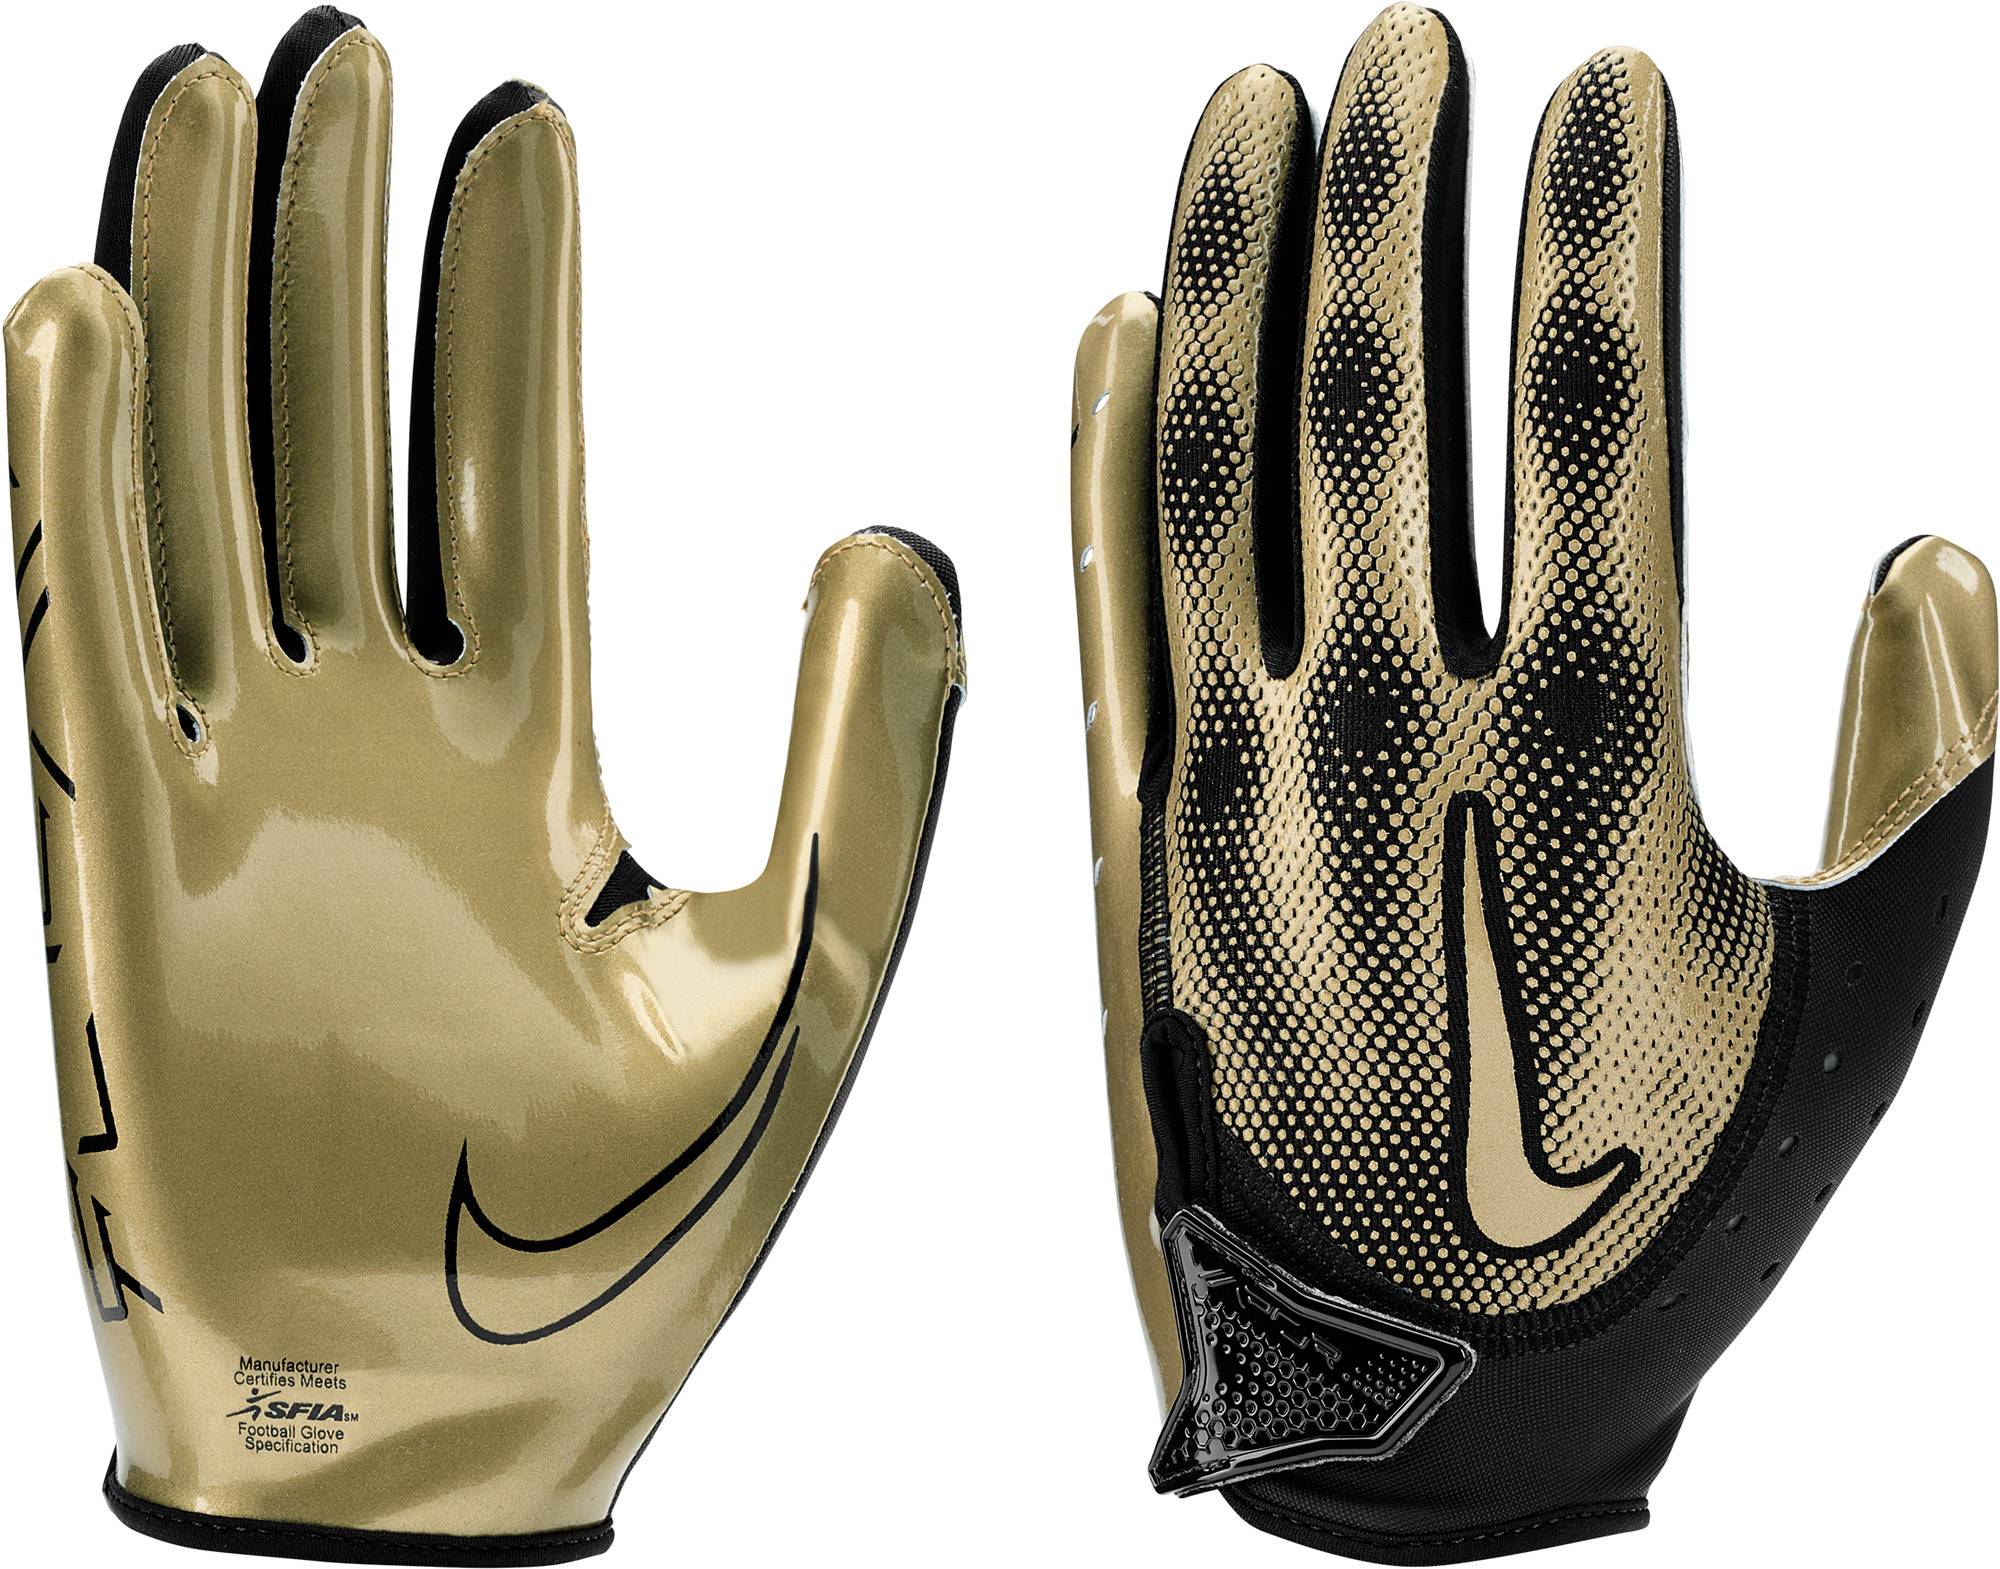 Nike Vapor 7.0 Adult Football Gloves